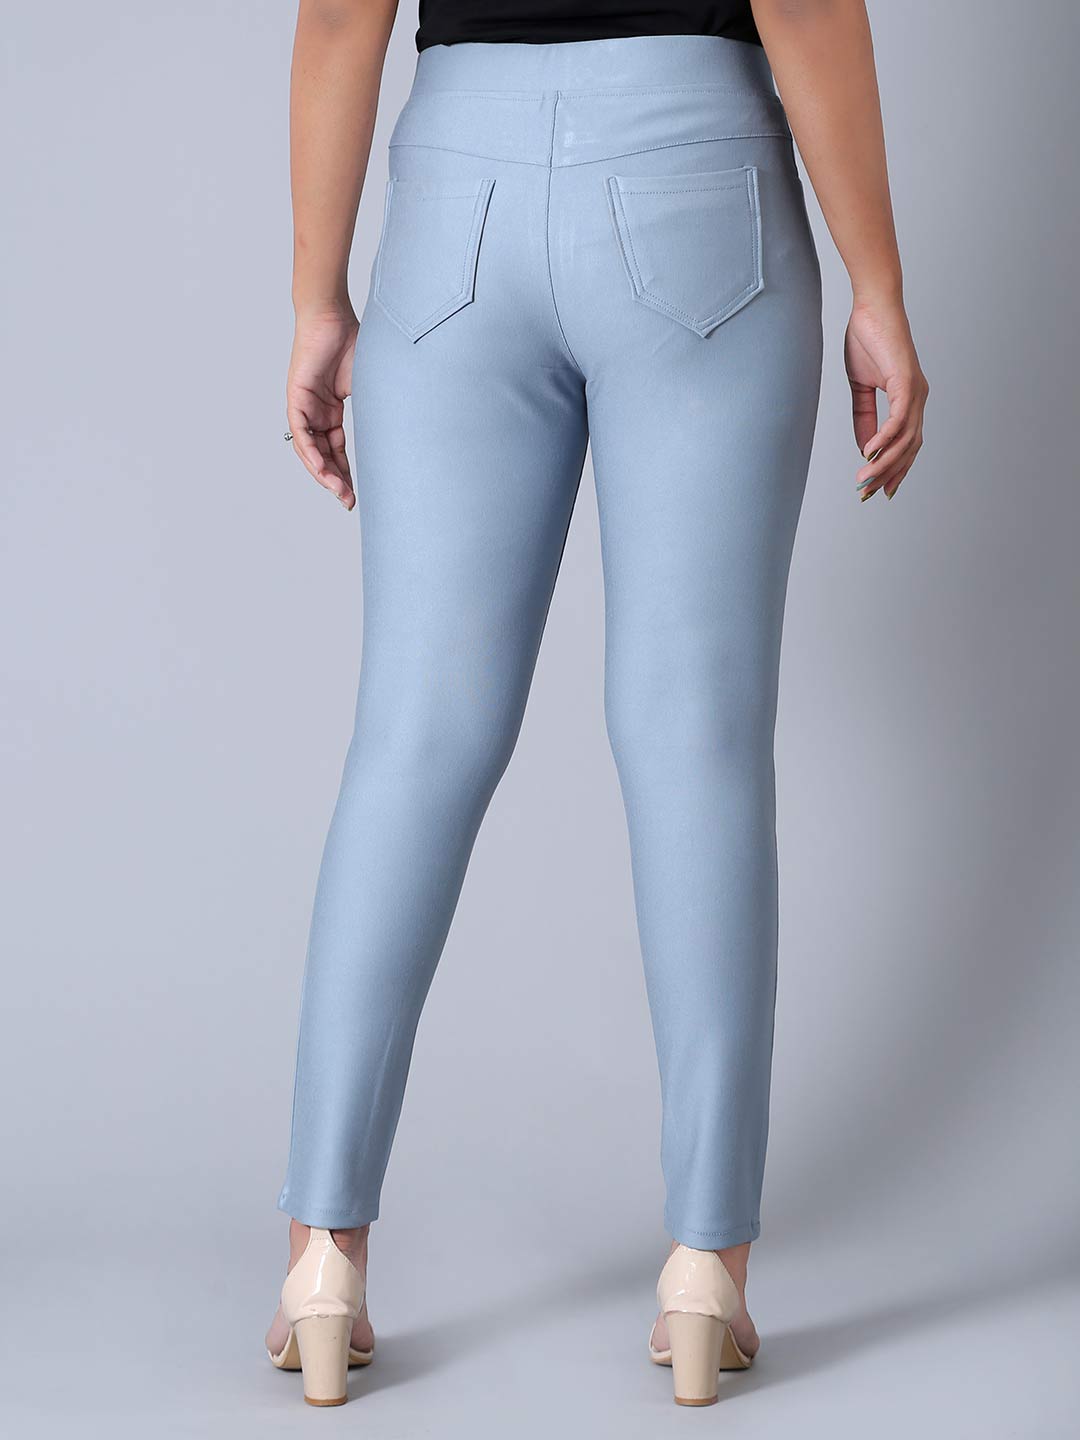 Level 99 Summer Janice Ultra Jeans - Skinny Jeans - Blue Jeggings - $106.00  - Lulus